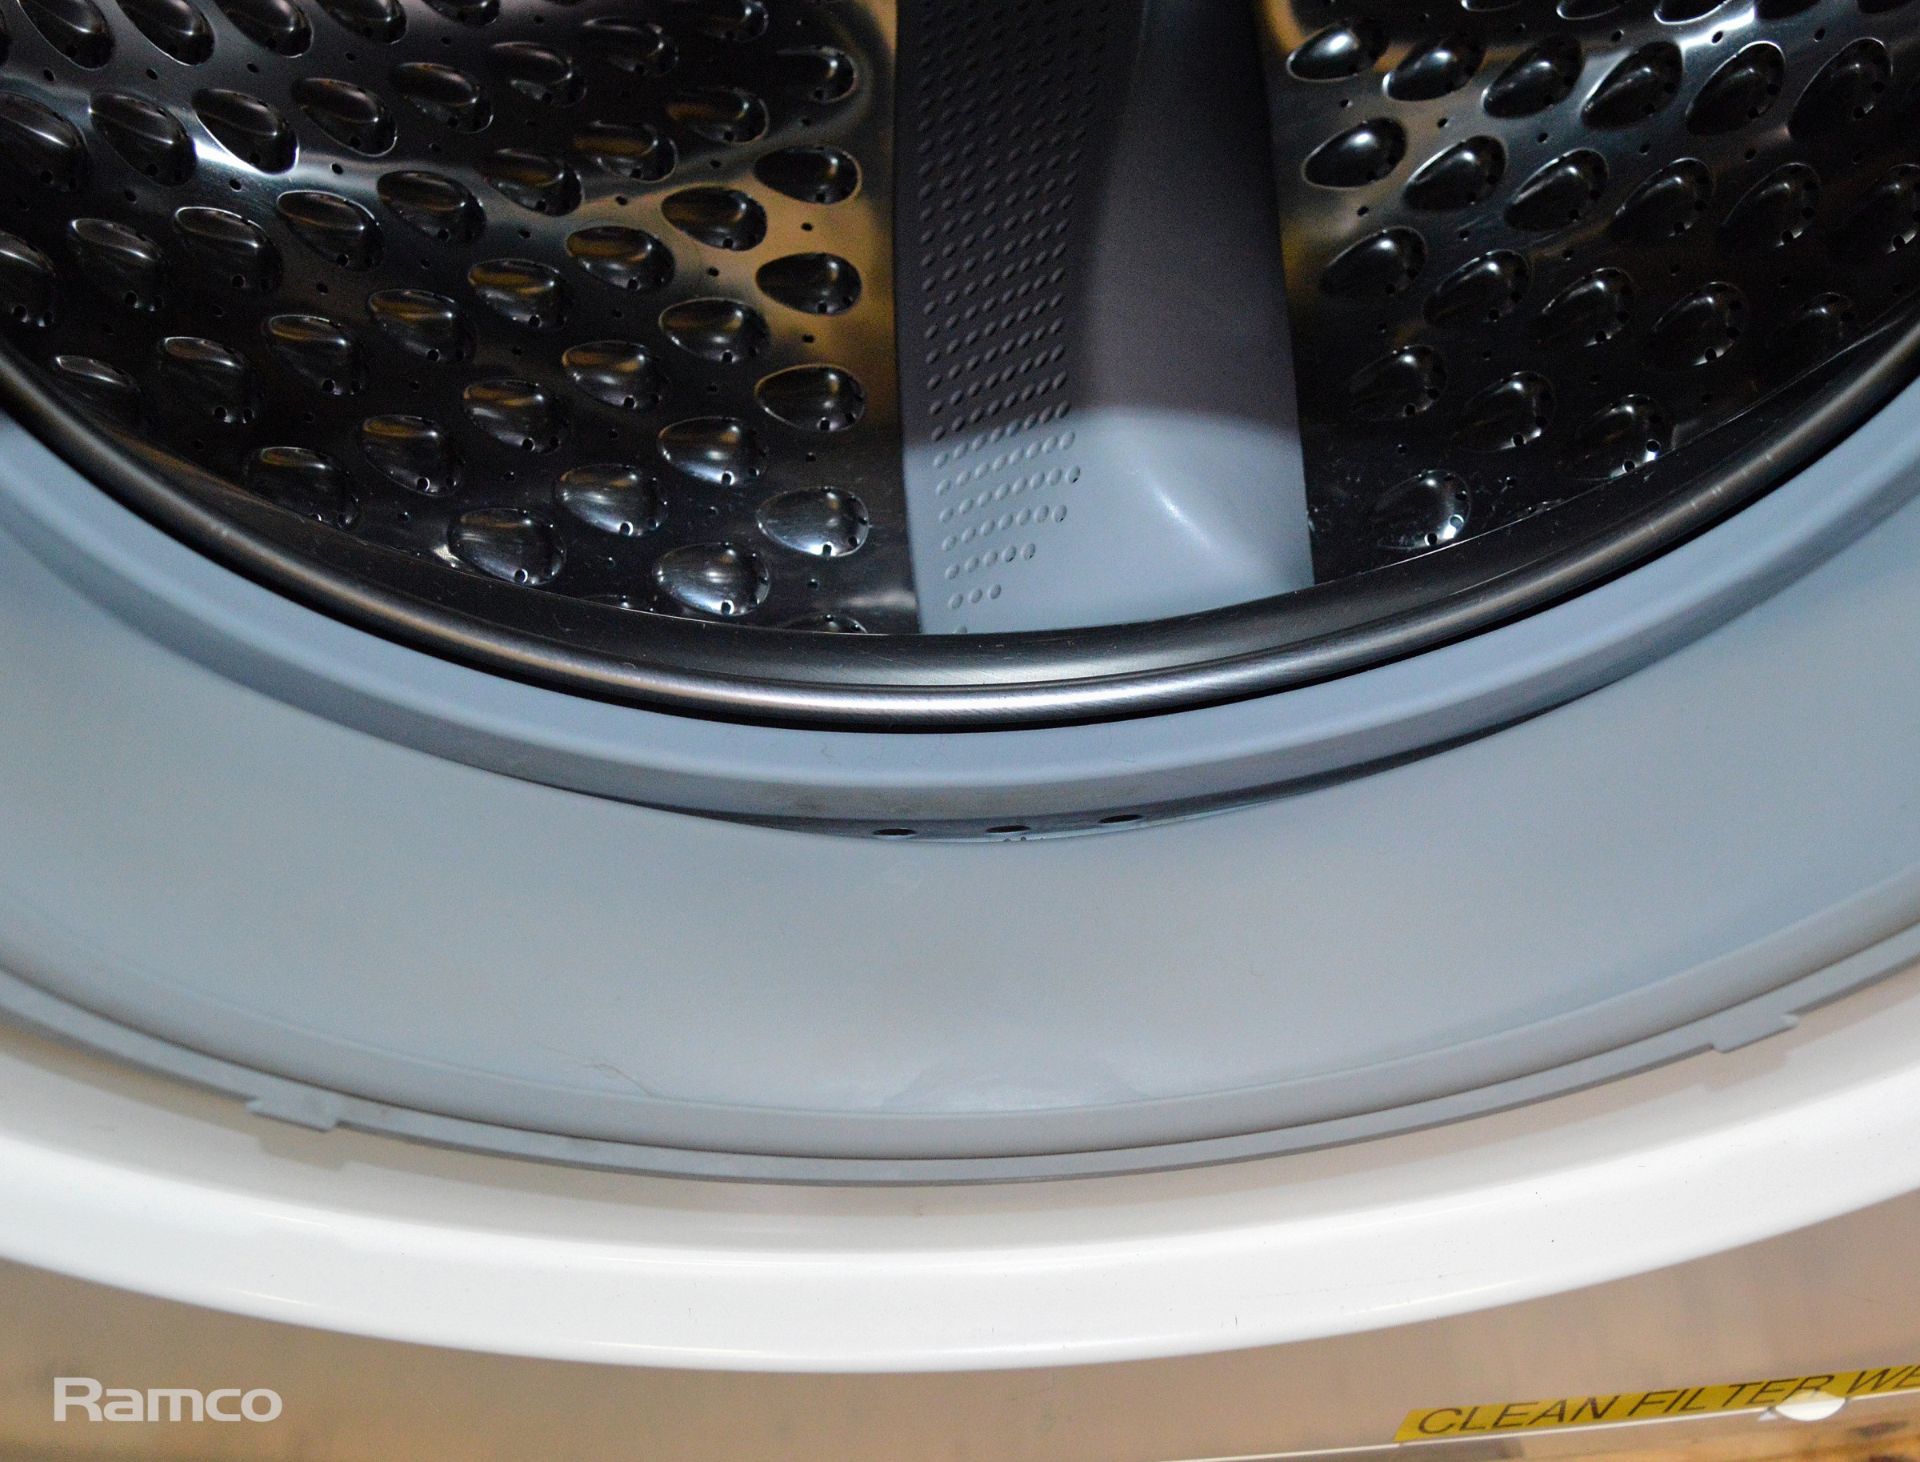 Bosch WAS28460Sn Washing Machine - 2 pin european plug - wash settings in German - Image 4 of 4